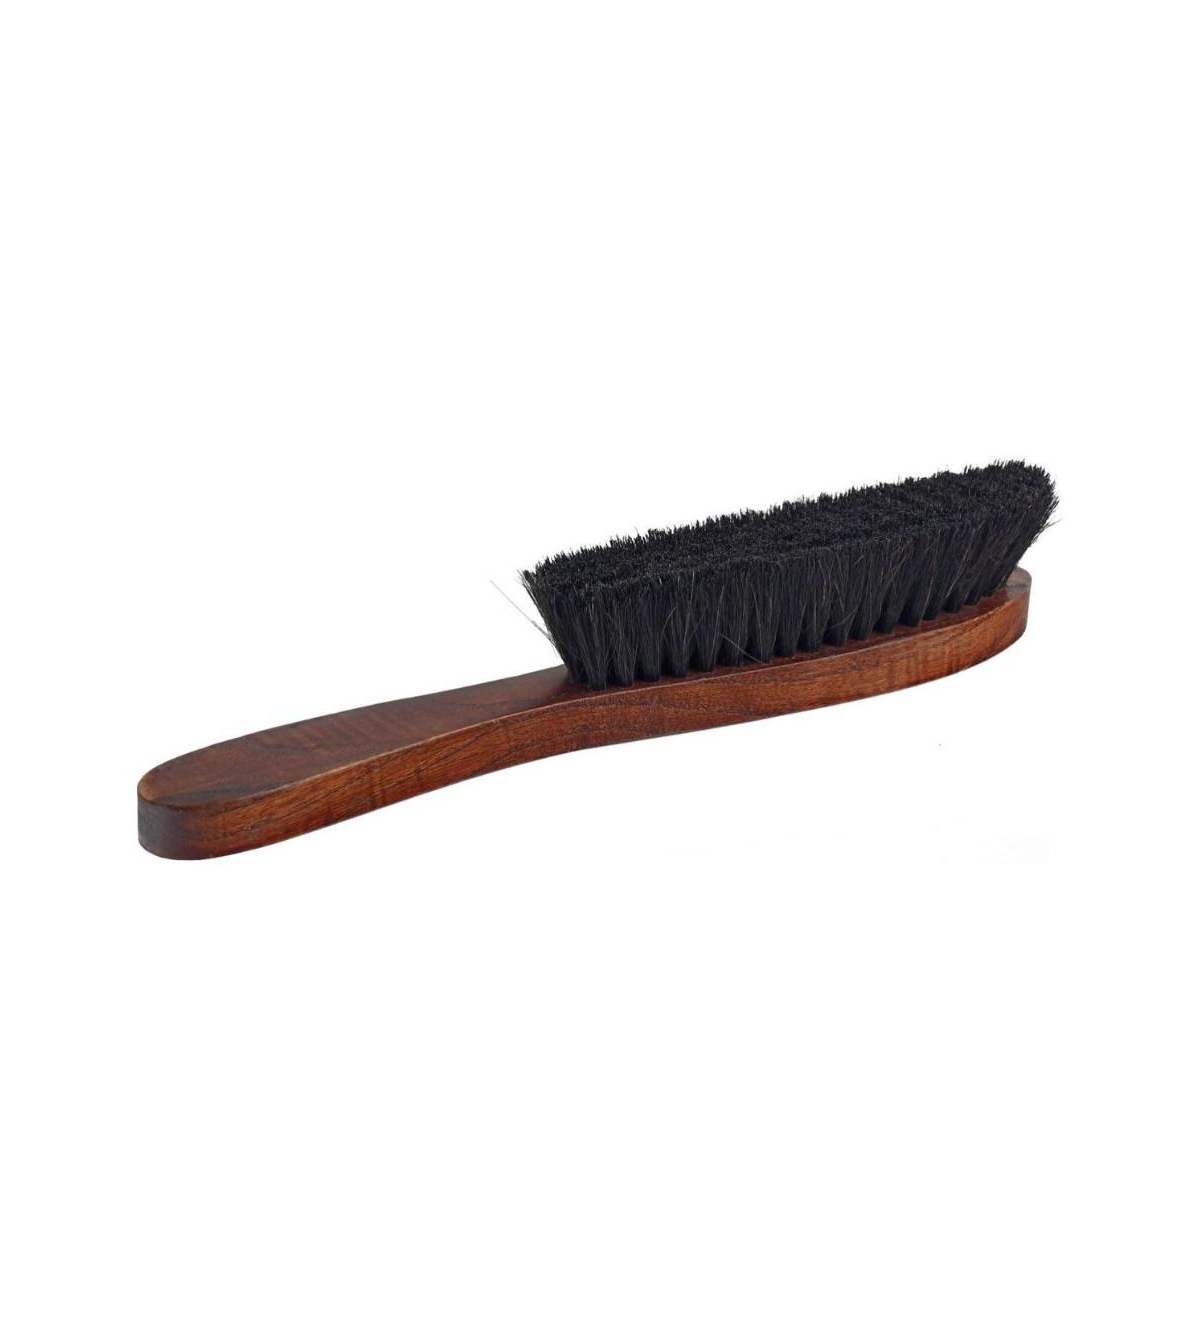 Hat Brush - High-Quality Hat Brush - Horse Hair Bristles Brush with Hardwood Handle - Horse Hair Hat Brush in Brown - Brown